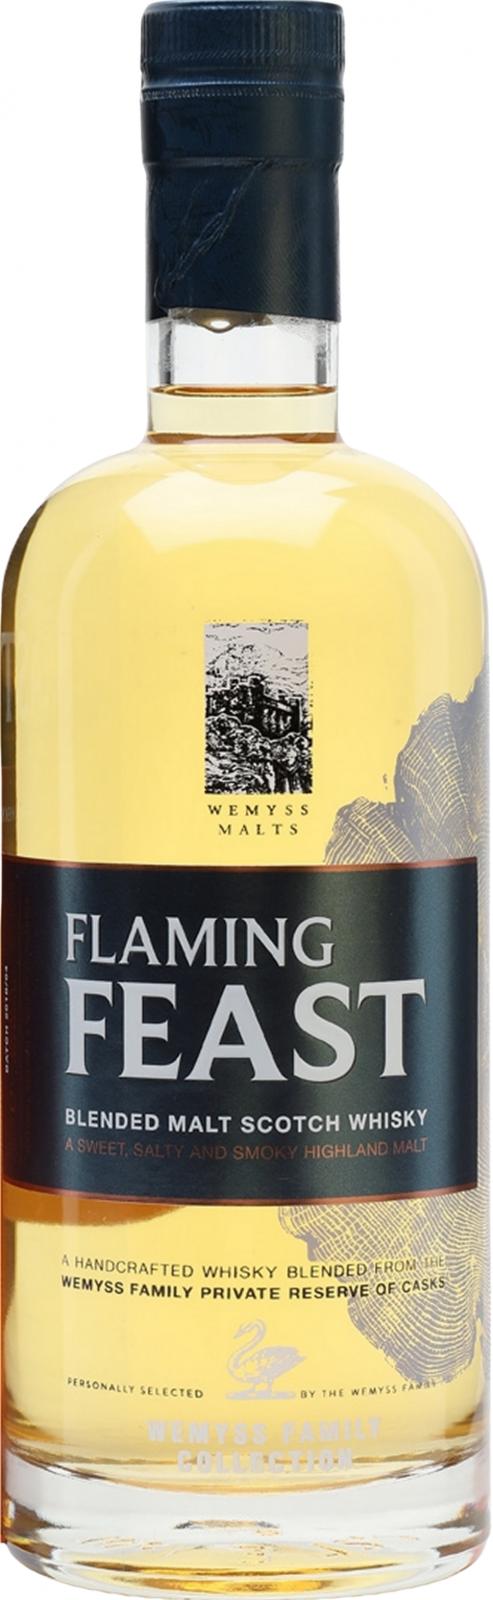 Flaming Feast Blended Malt Scotch Whisky